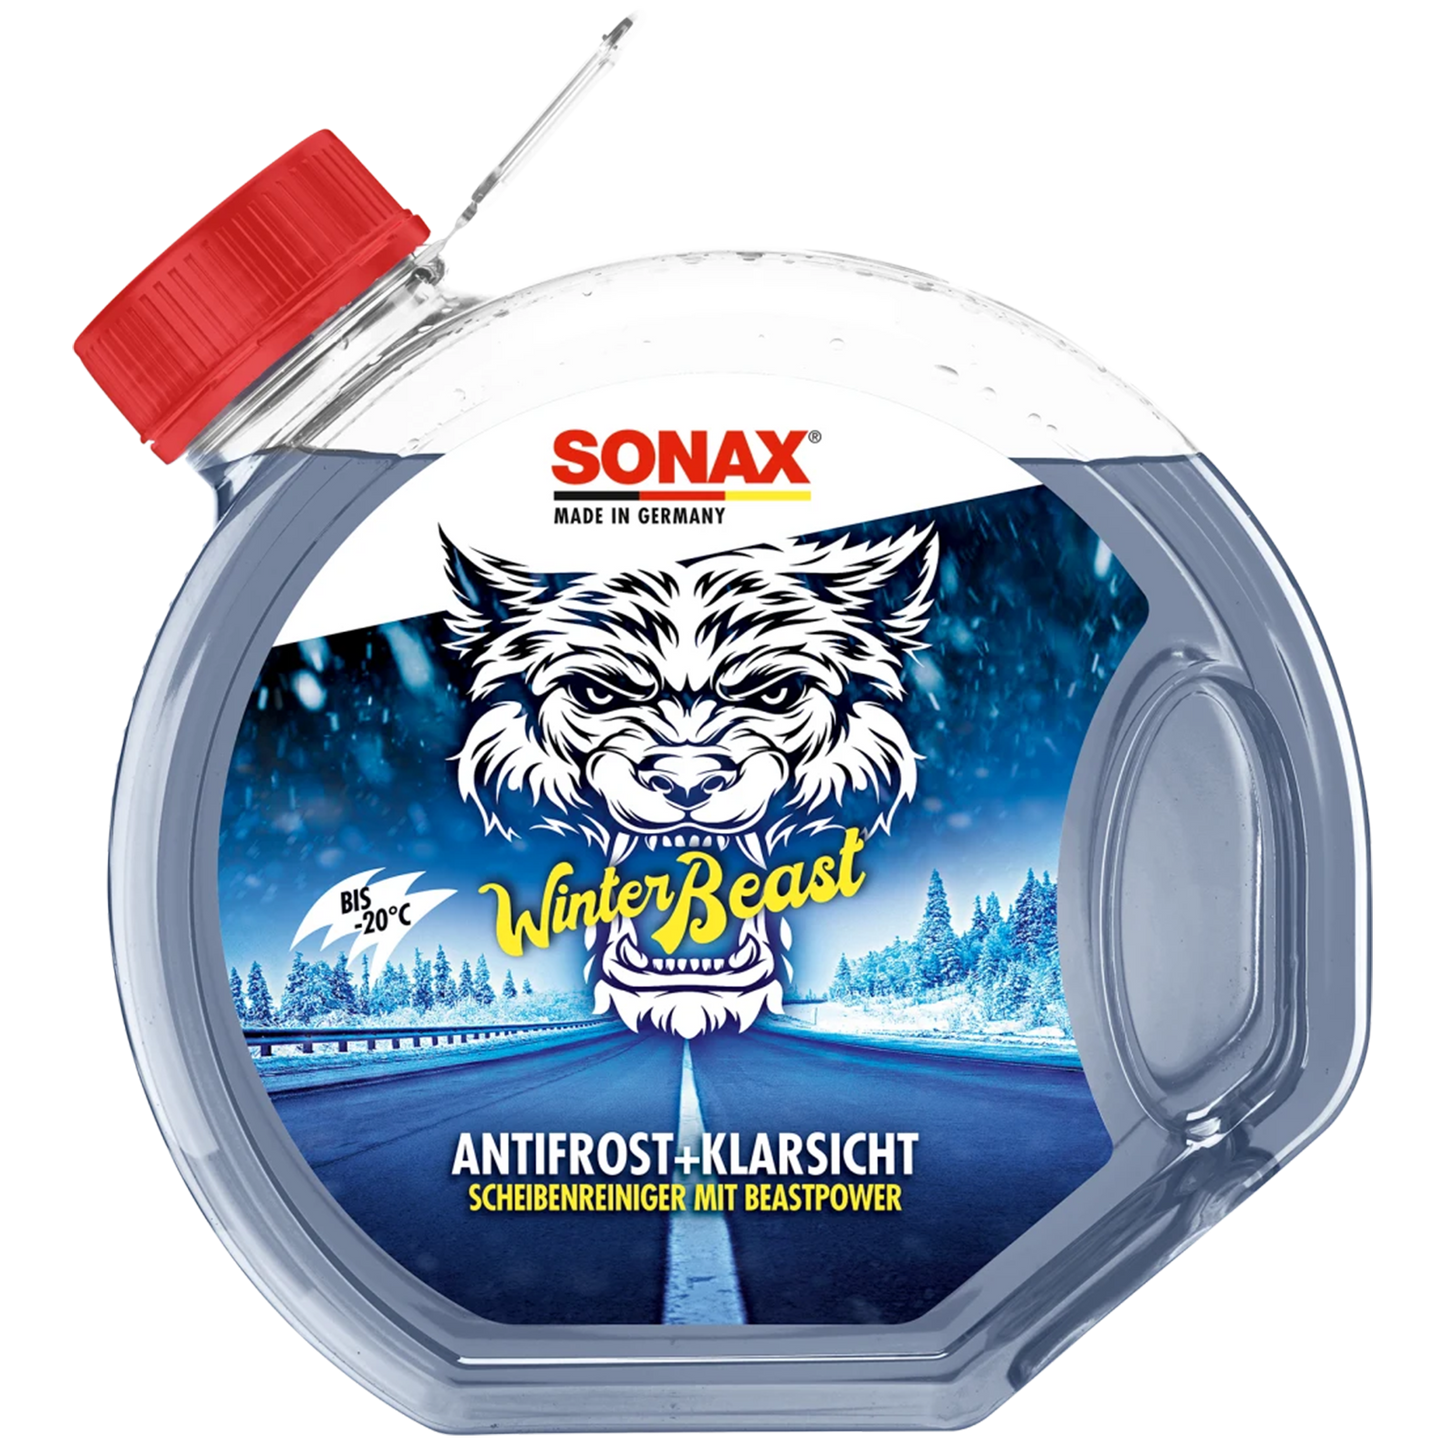 SONAX "Winterbeast" Antifrost & Klarsicht bis -20°C